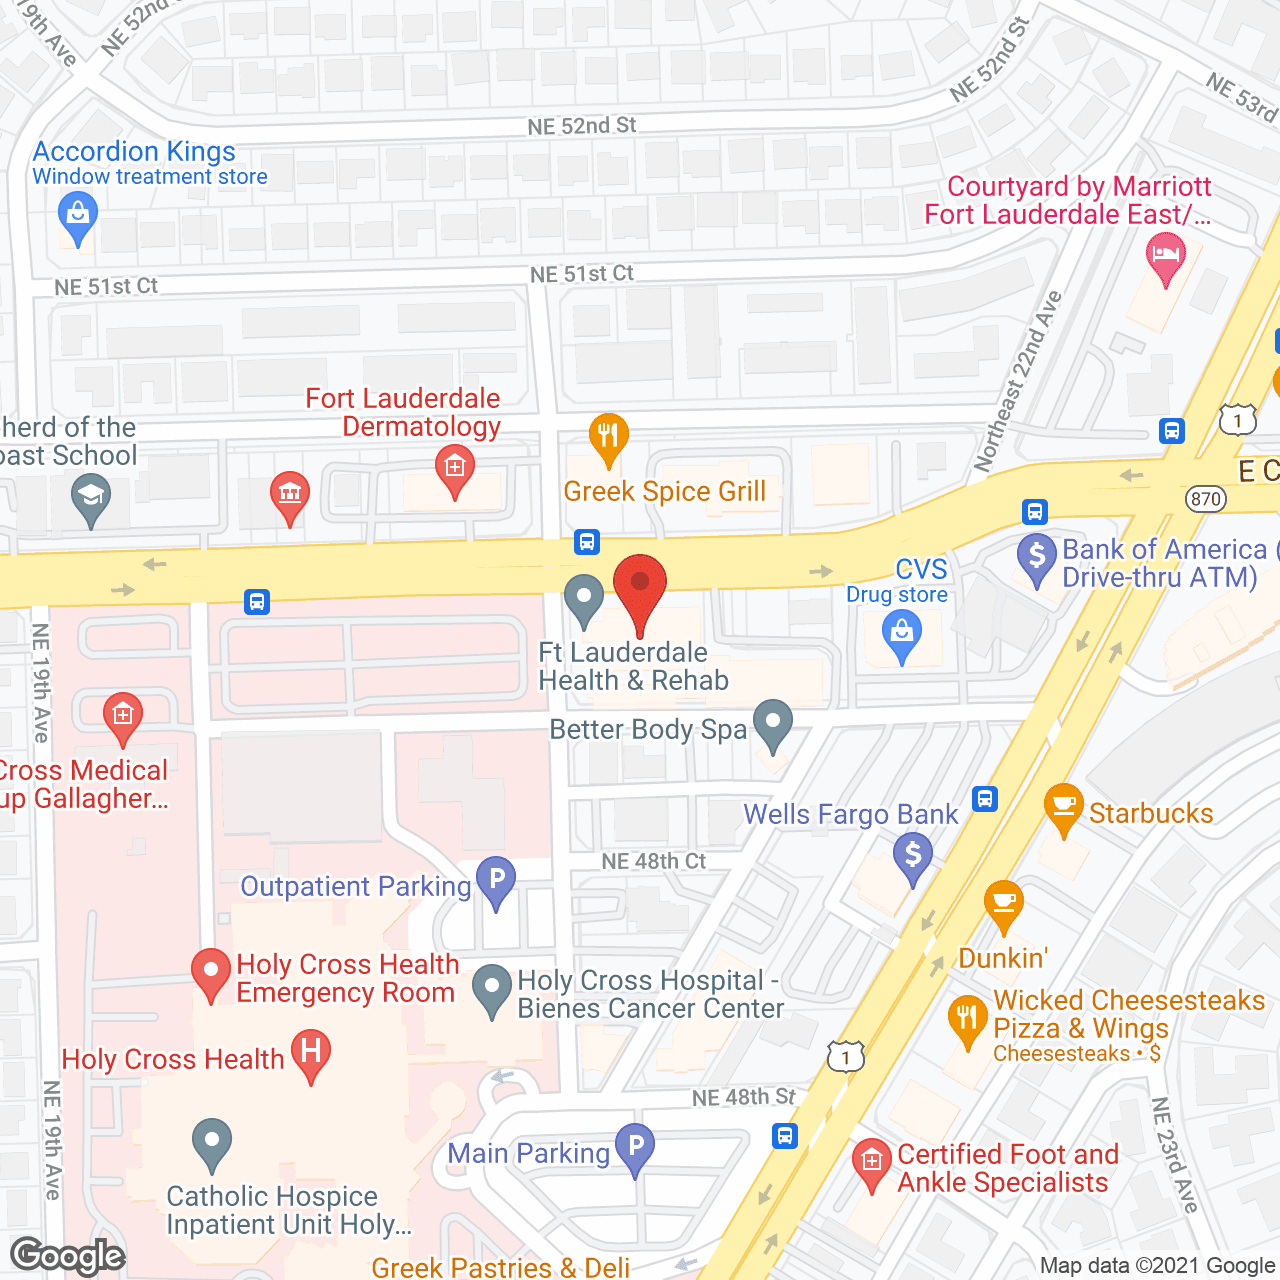 Fort Lauderdale Health & Rehab in google map